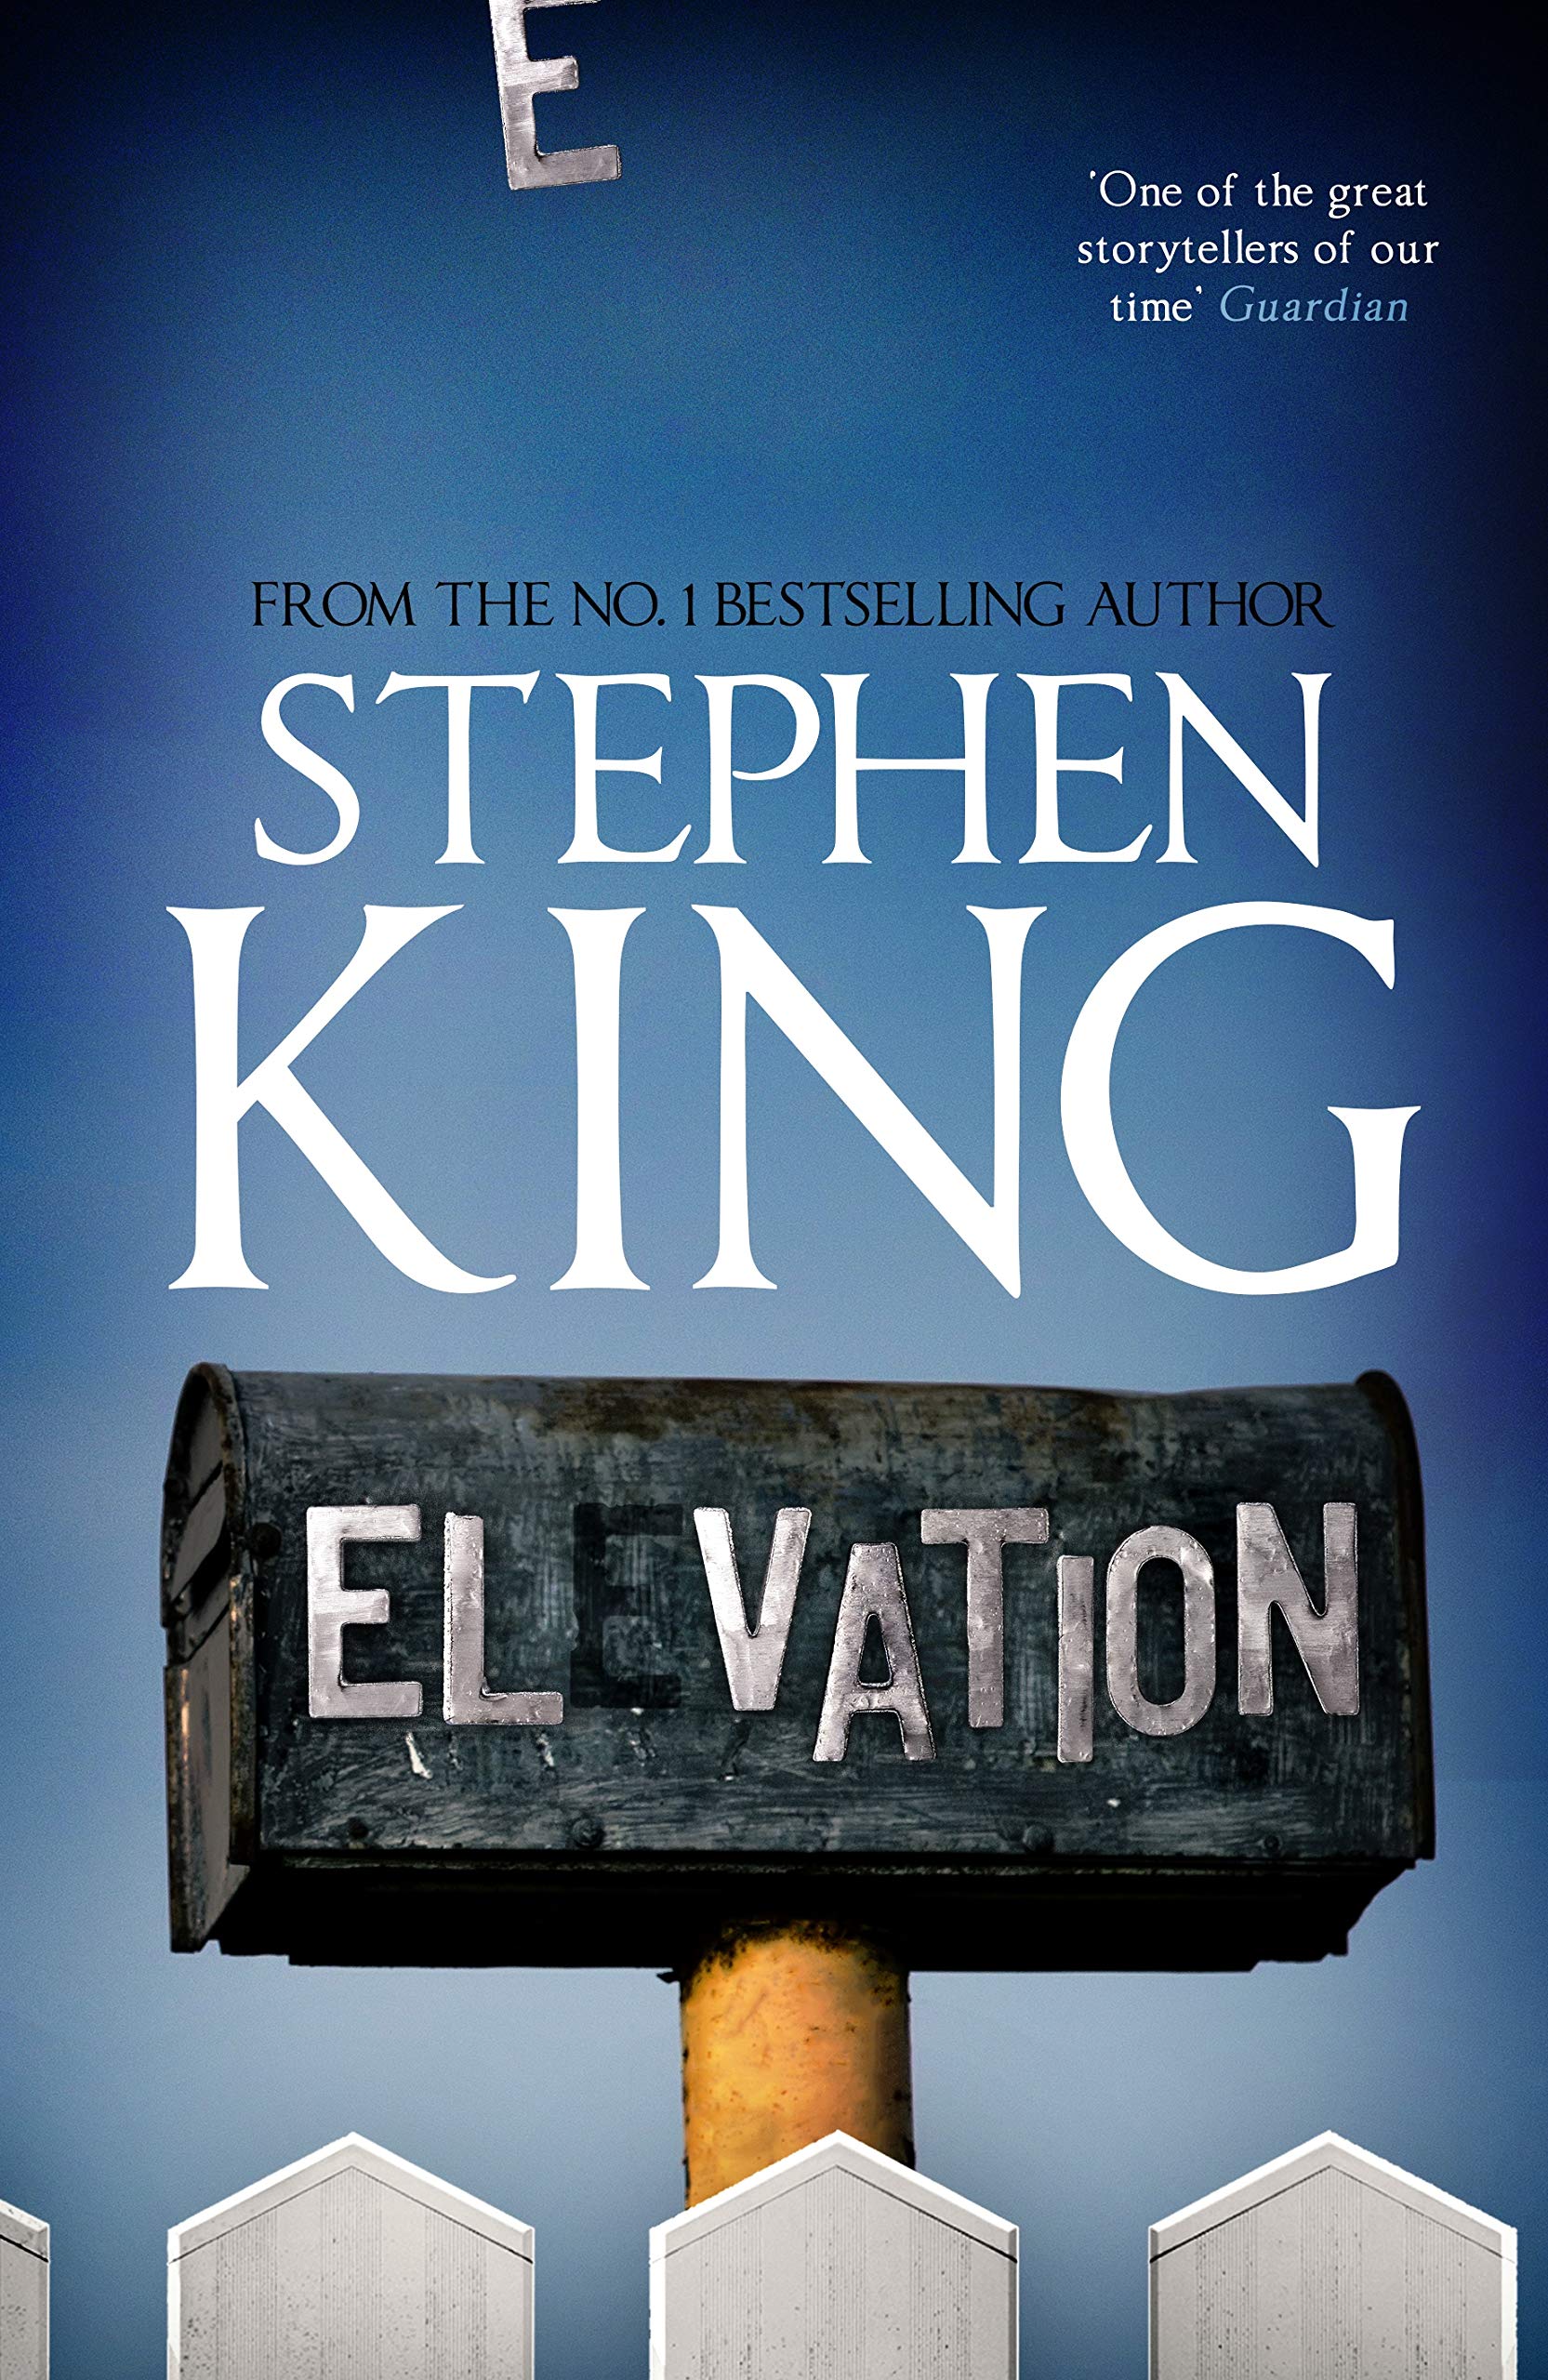 boom reviews - Stephen King - Elevation